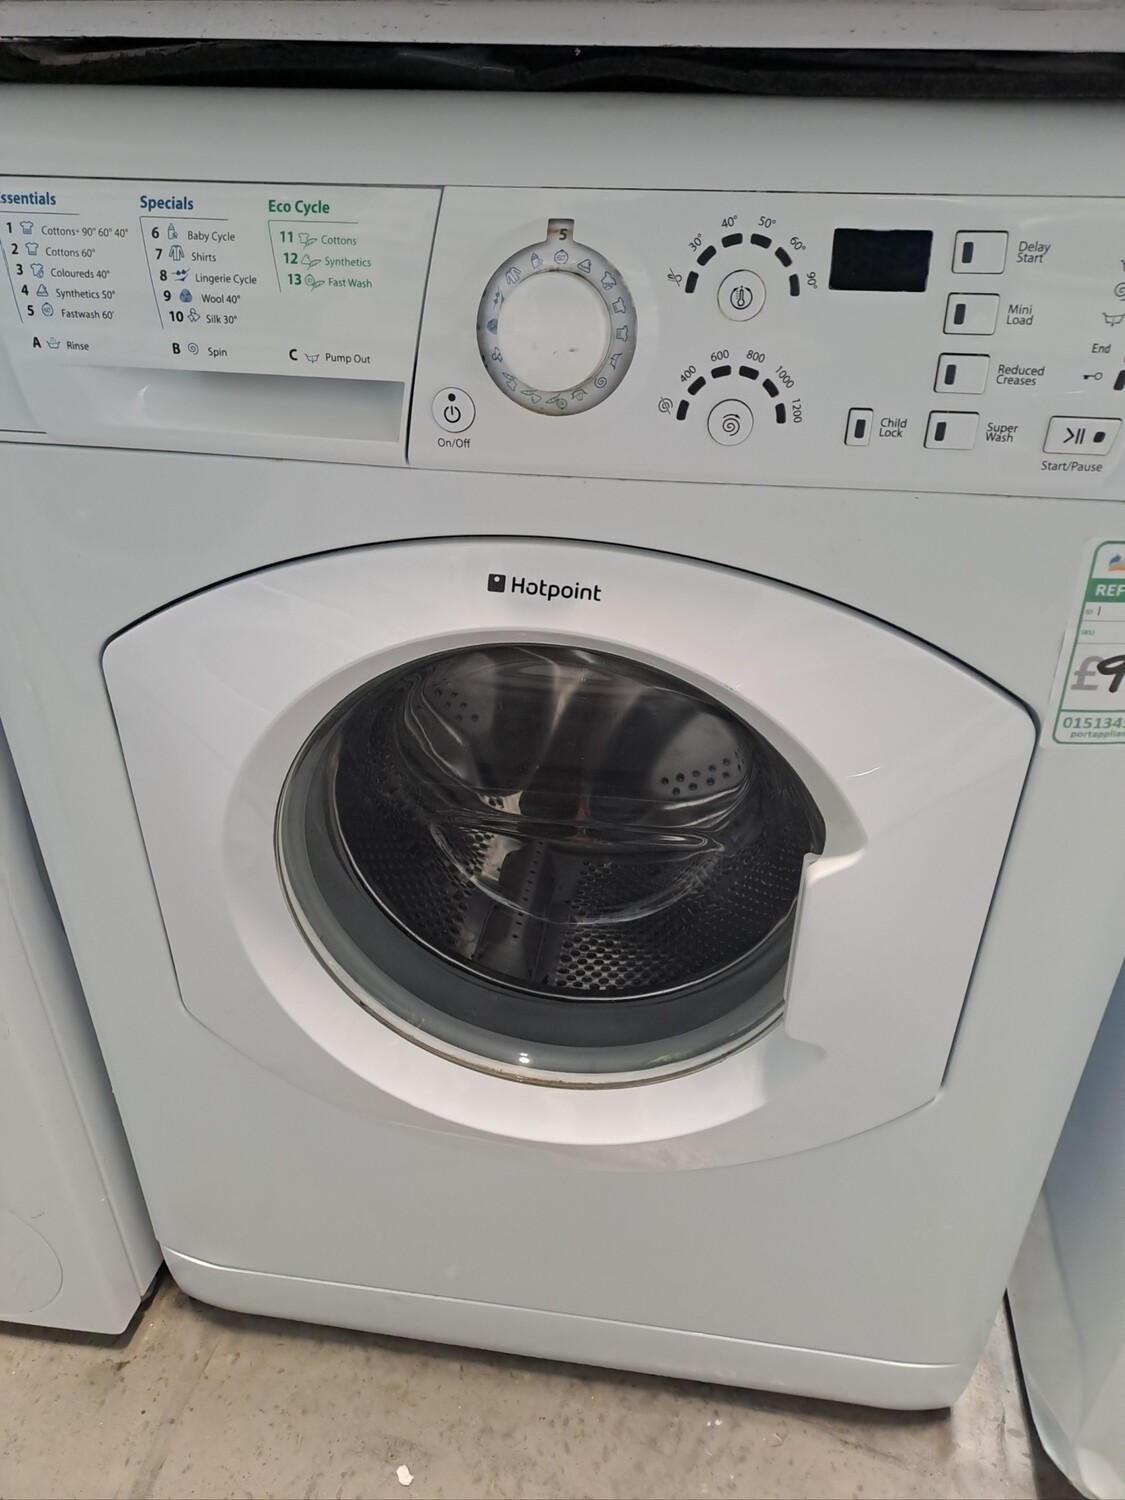 Hotpoint 7kg Load, 1400 Spin Washing Machine - White - Refurbished + 6 Month Guarantee